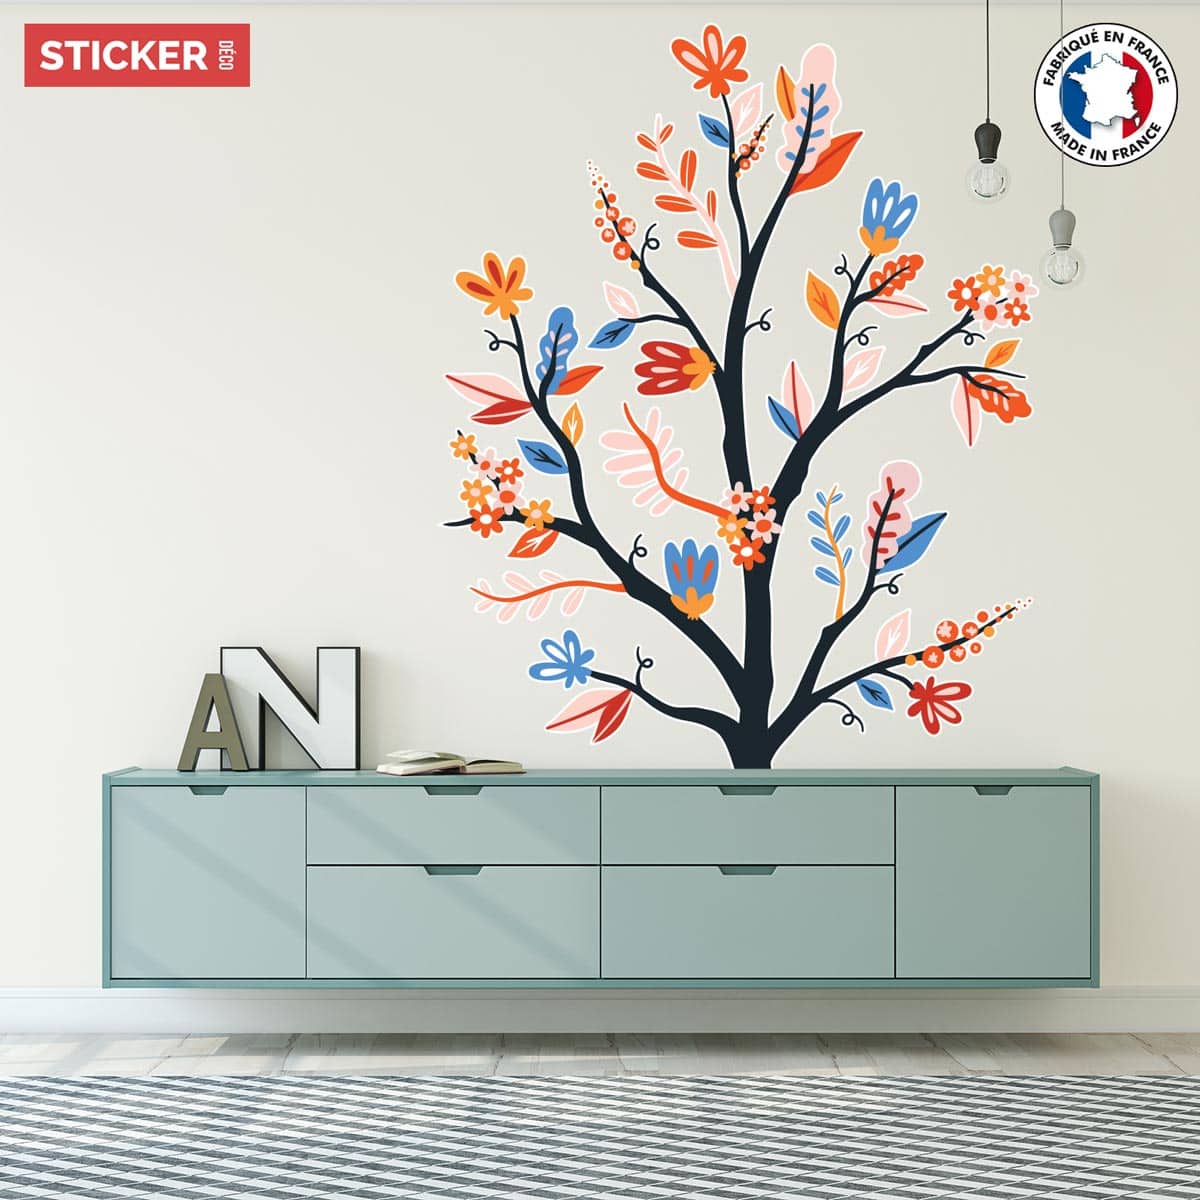 Sticker mural branche fleurs vertes